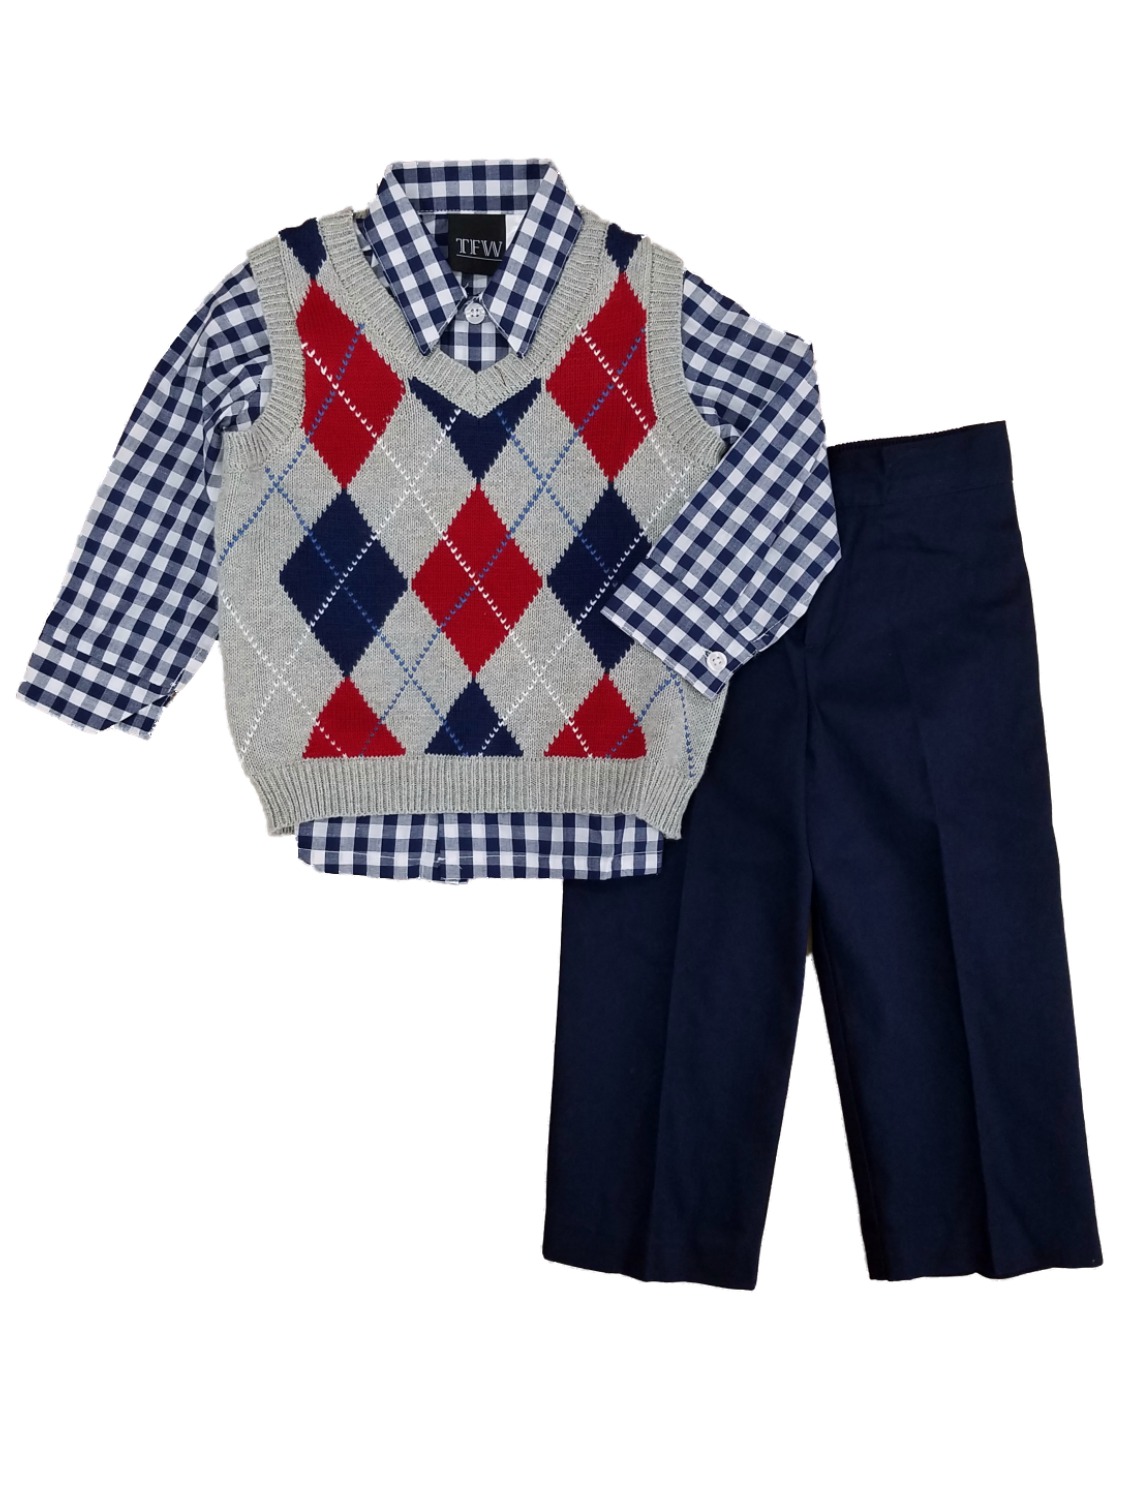 TFW Infant Boys 3-Piece Dress Up Outfit Gray Argyle Sweater Vest Shirt & Pants